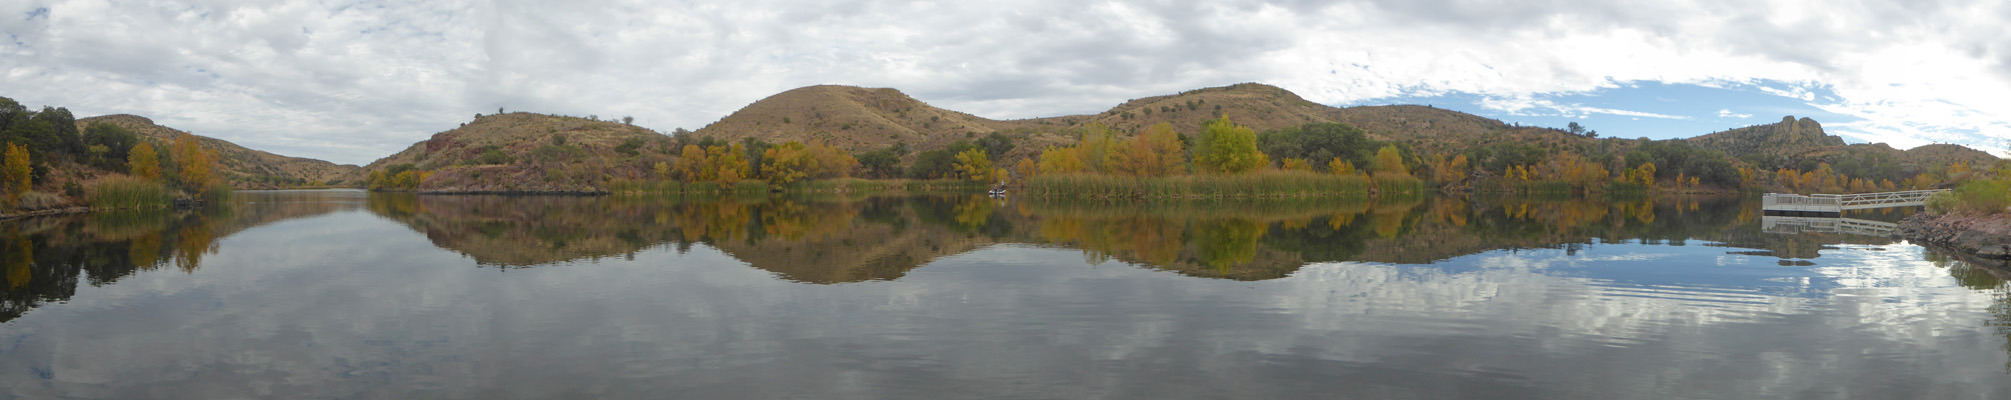 Pena Blanca Lake